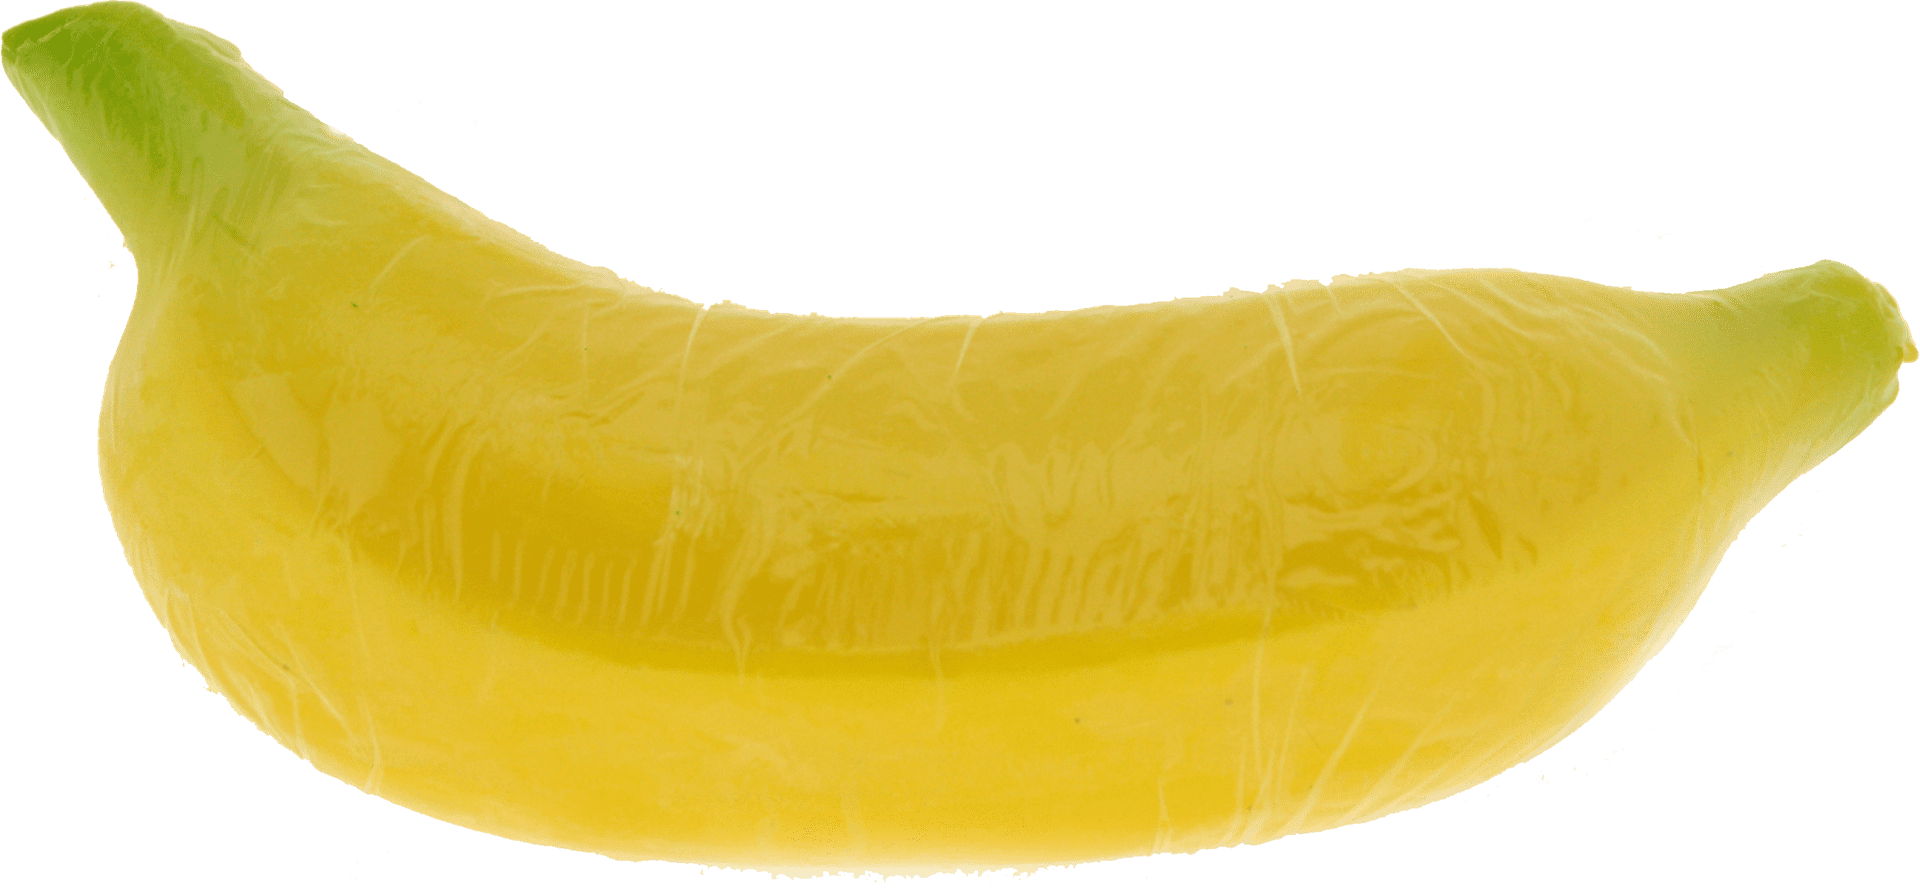 Wb Stores Fruit Soap Banana